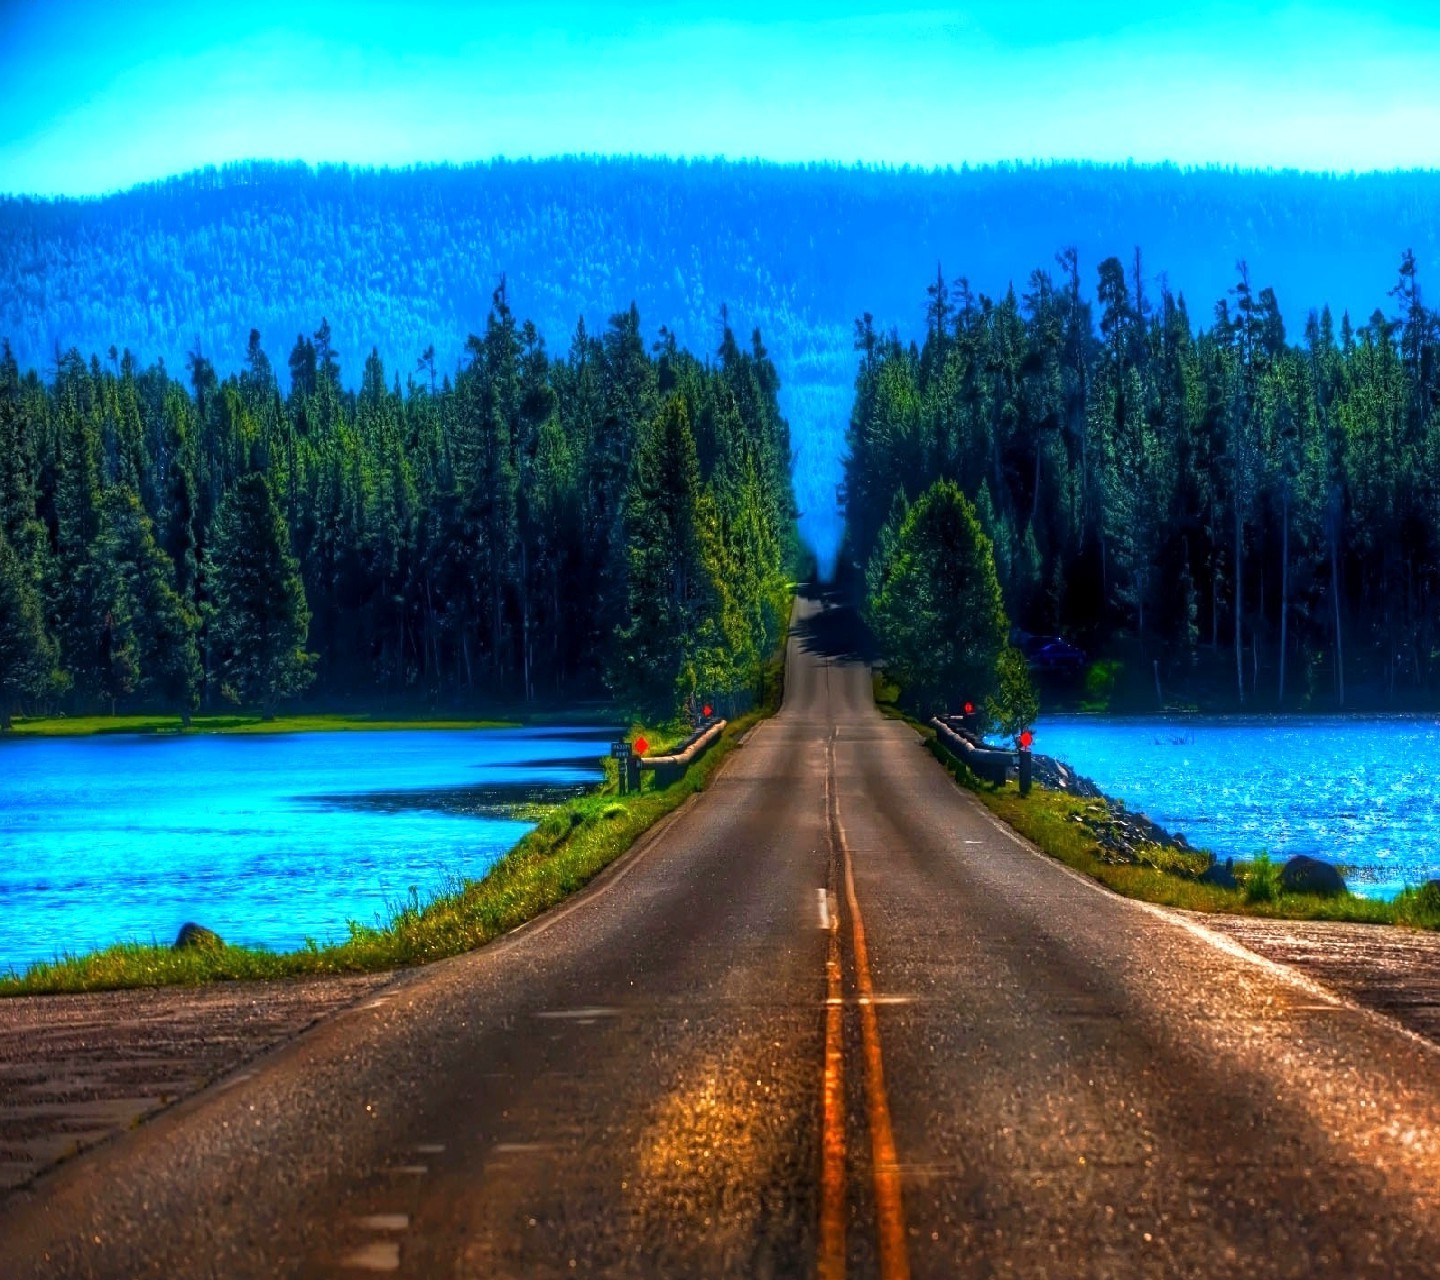 The road dividing blue lake